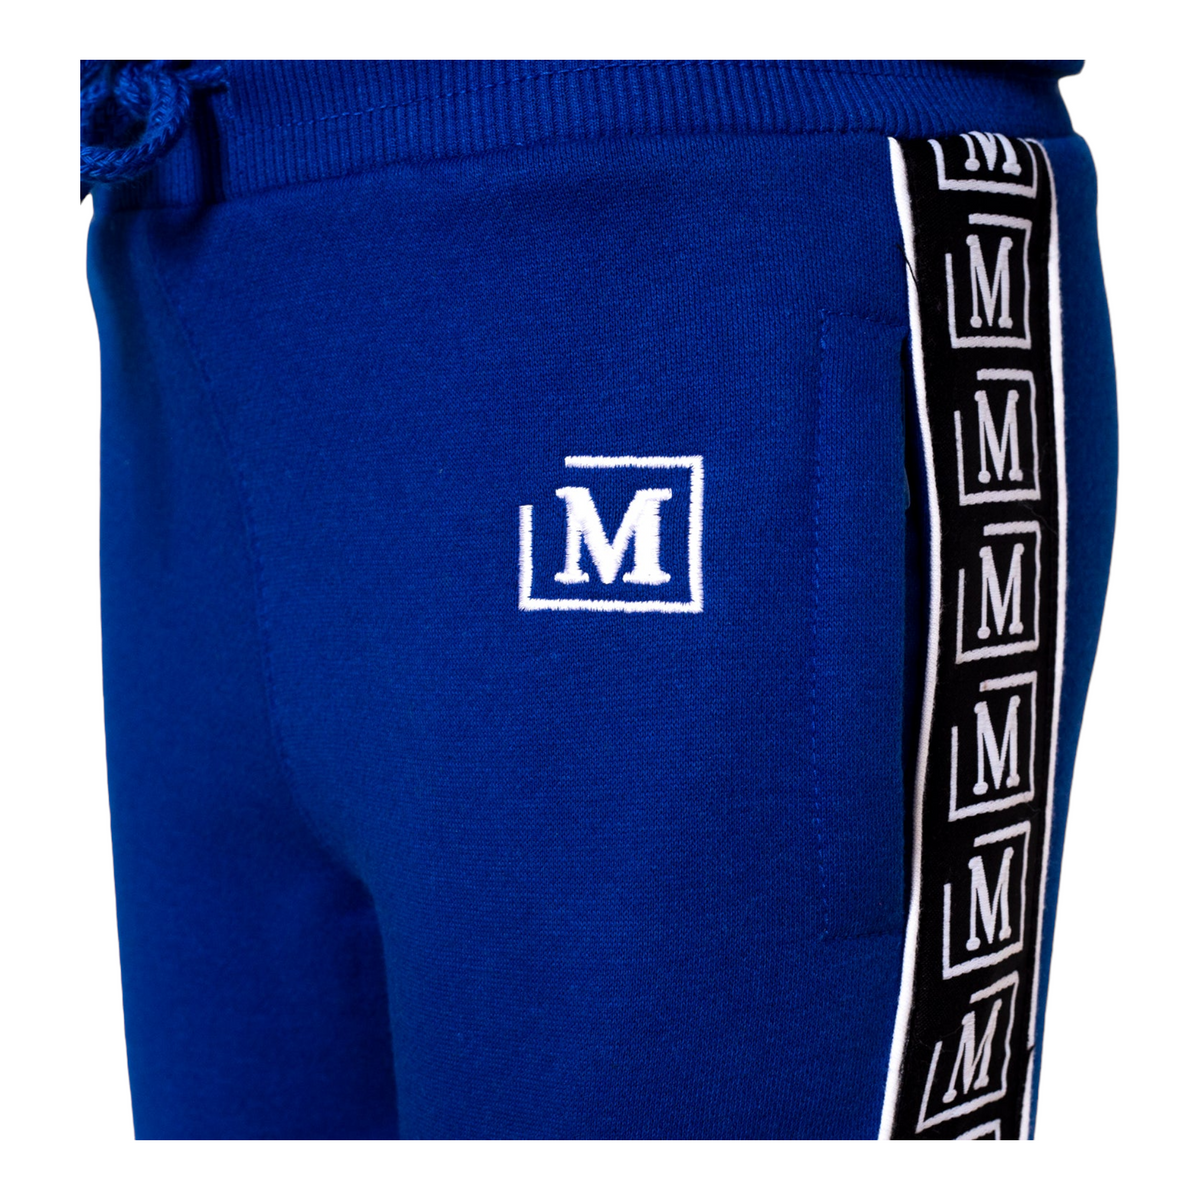 MDB Brand Kid's Classic Fleece Hooded Sweatsuit - Blue